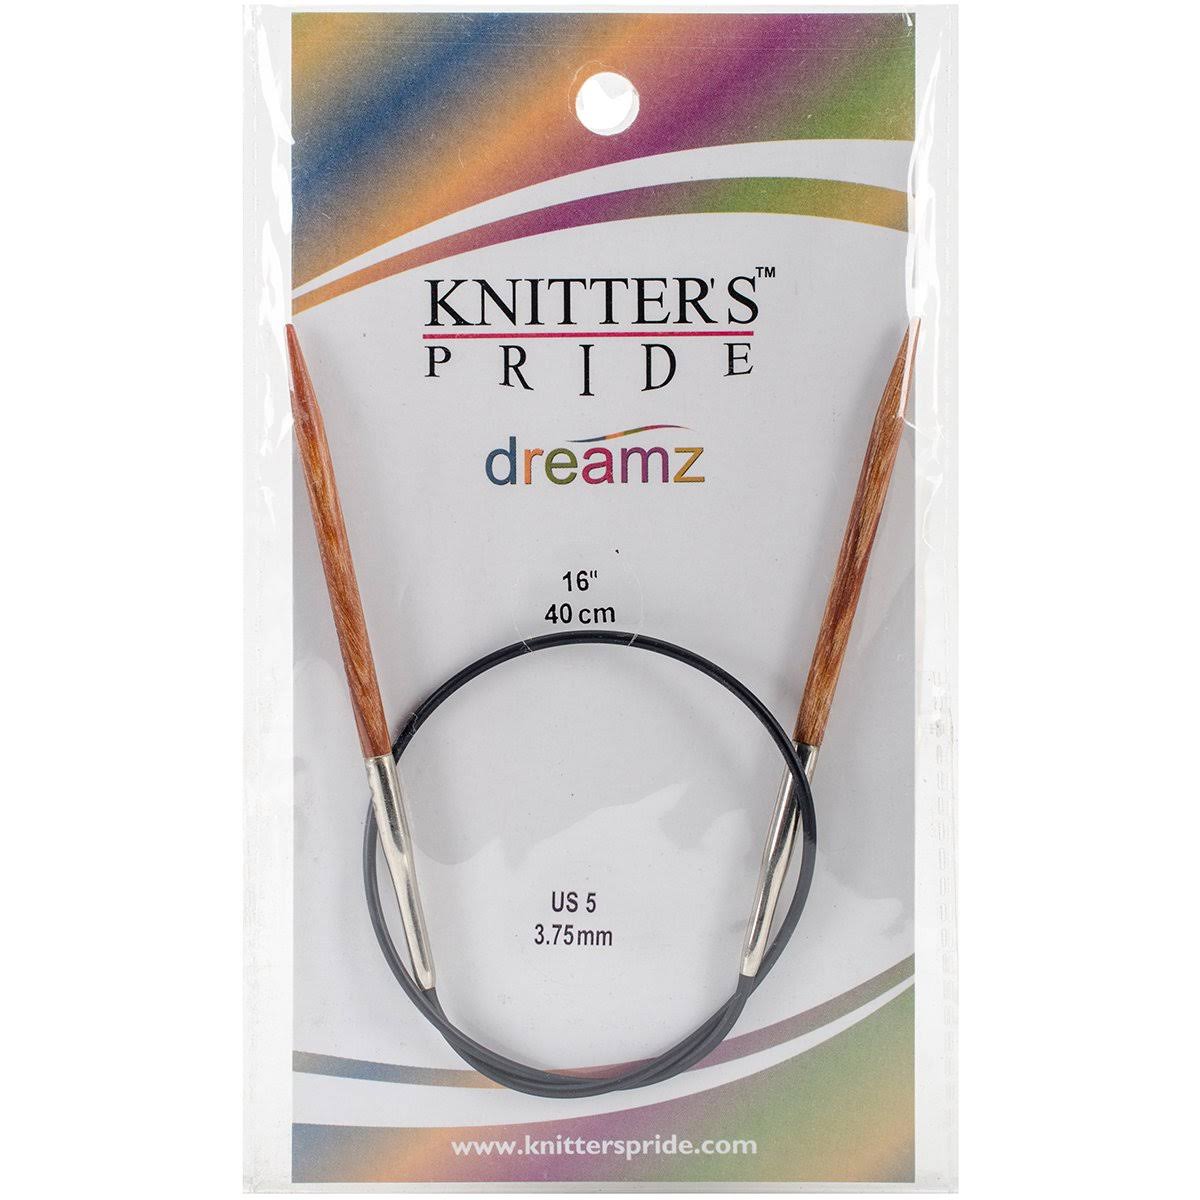 Knitters Pride Dreamz Circular Knitting Needles - Size 5 (3.75mm), 16"